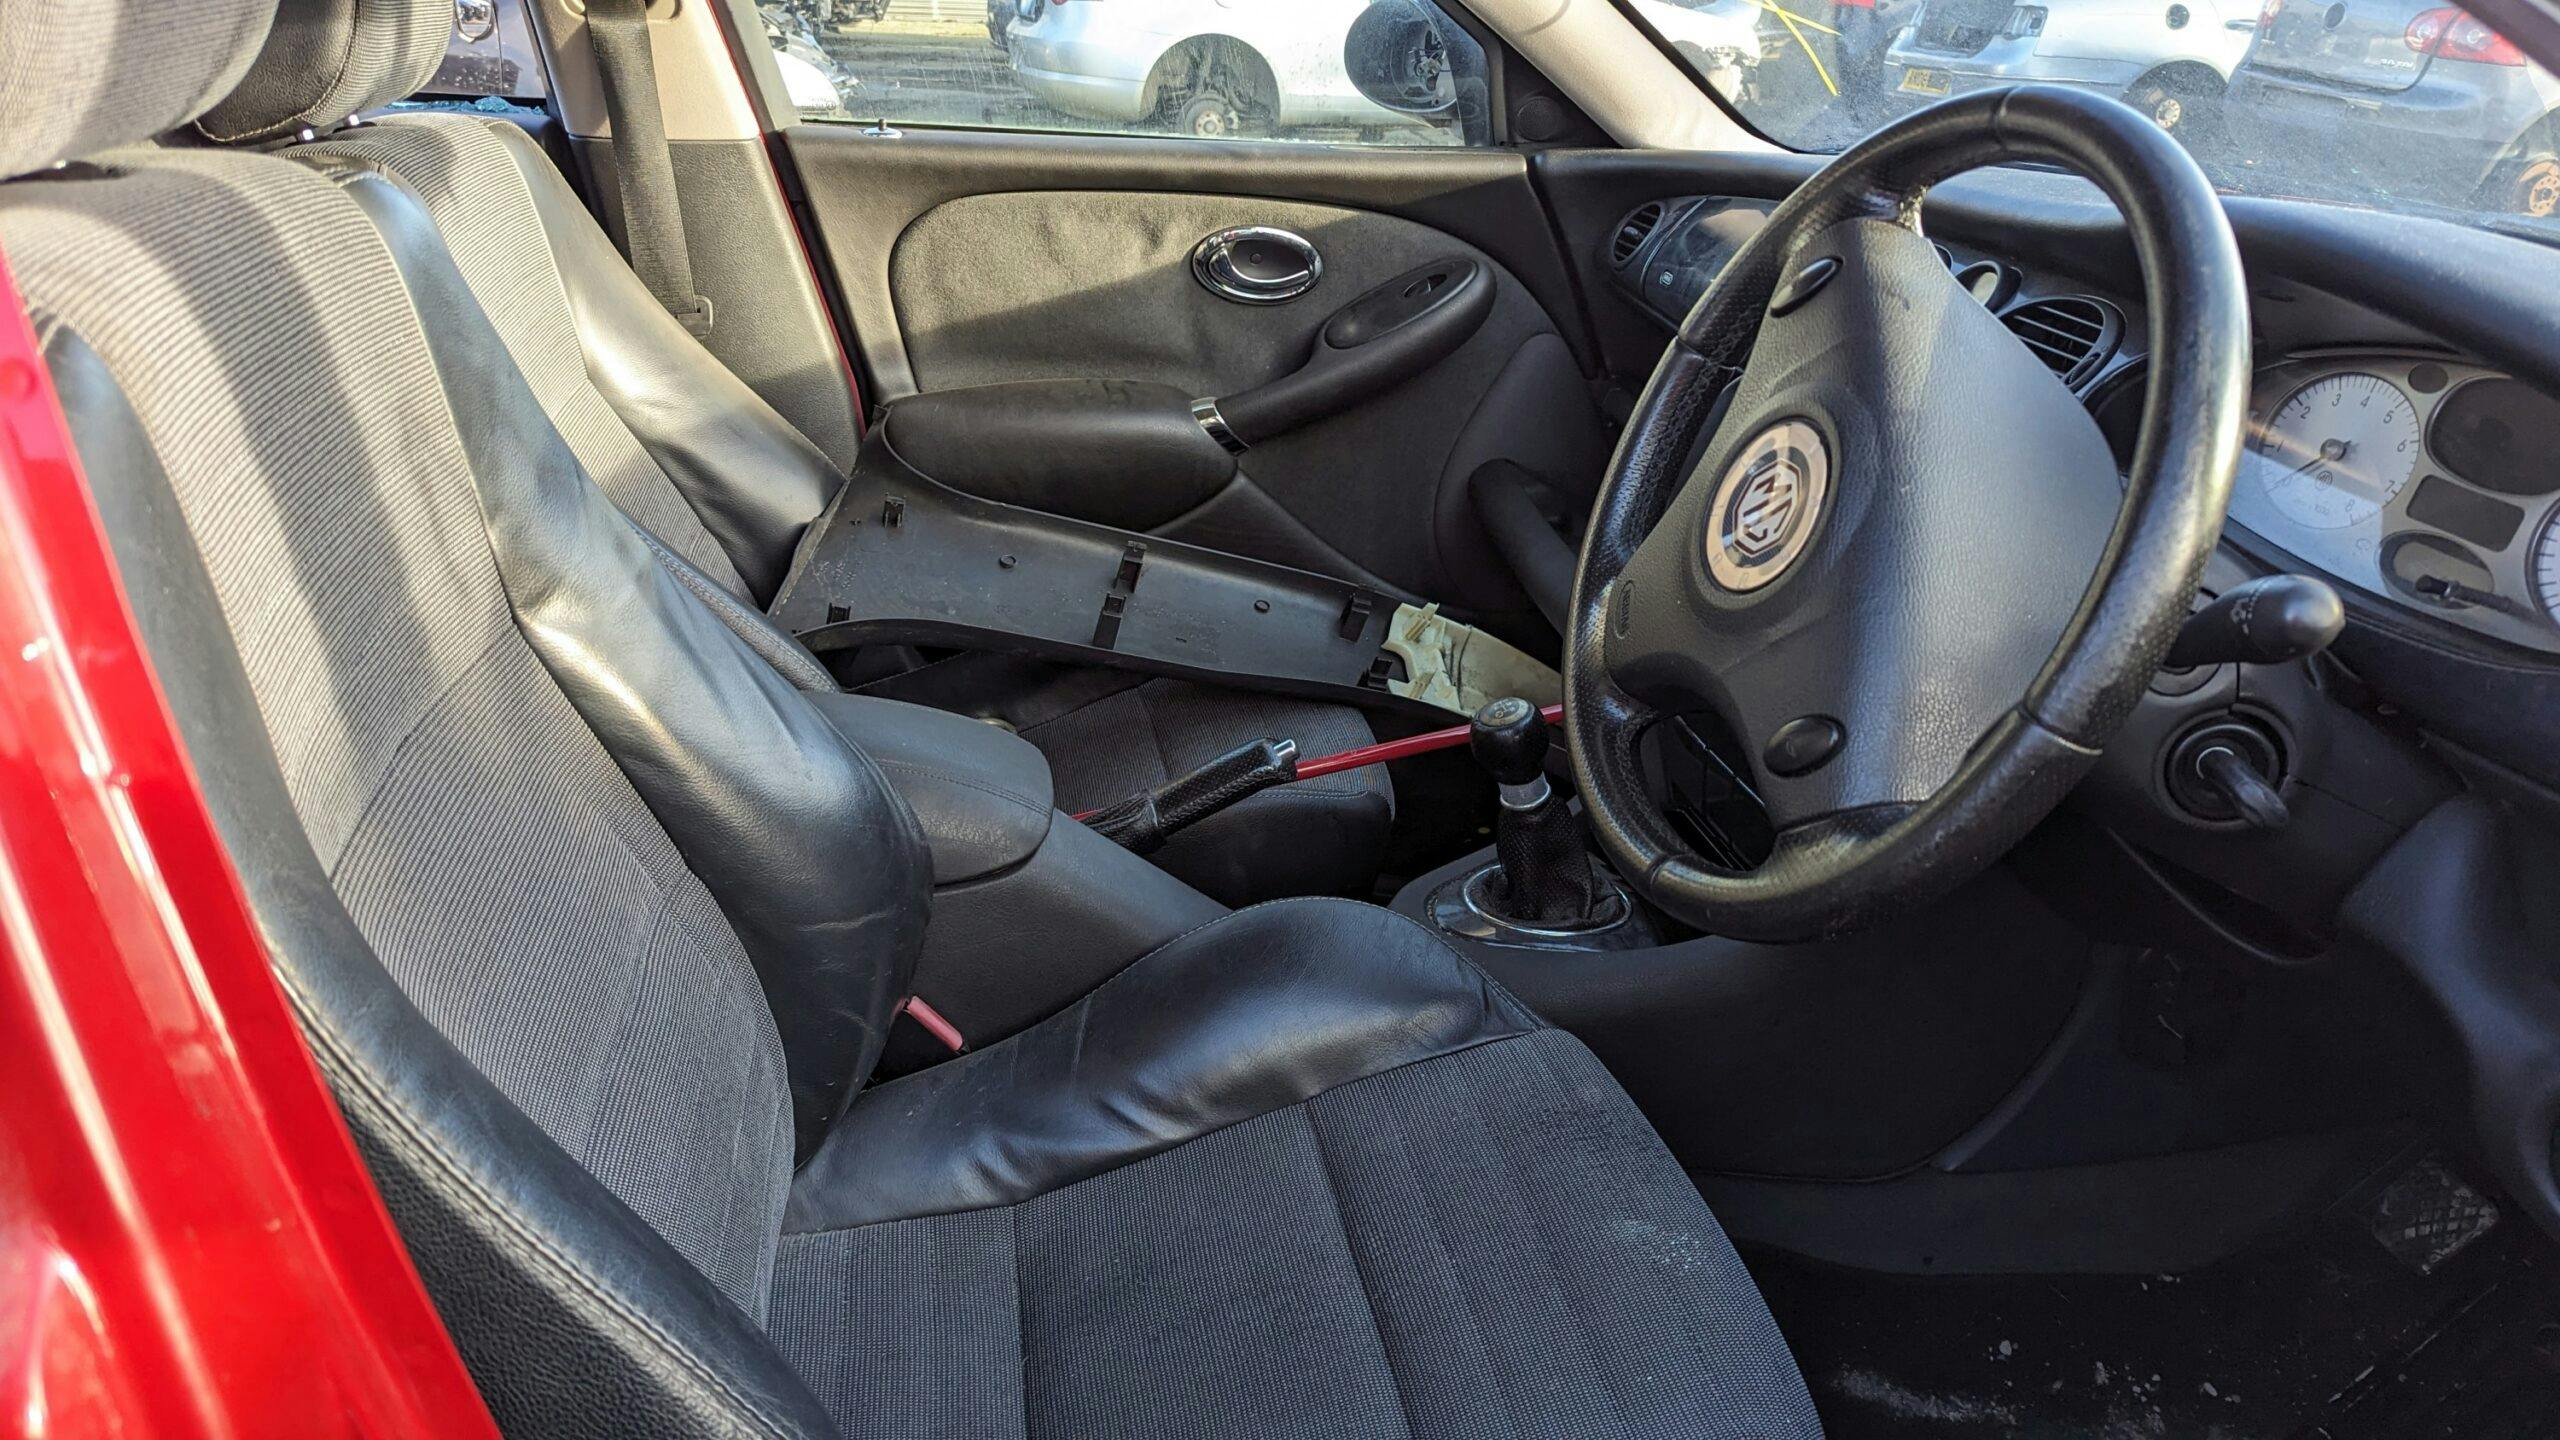 2005 MG ZT 190 interior front seats